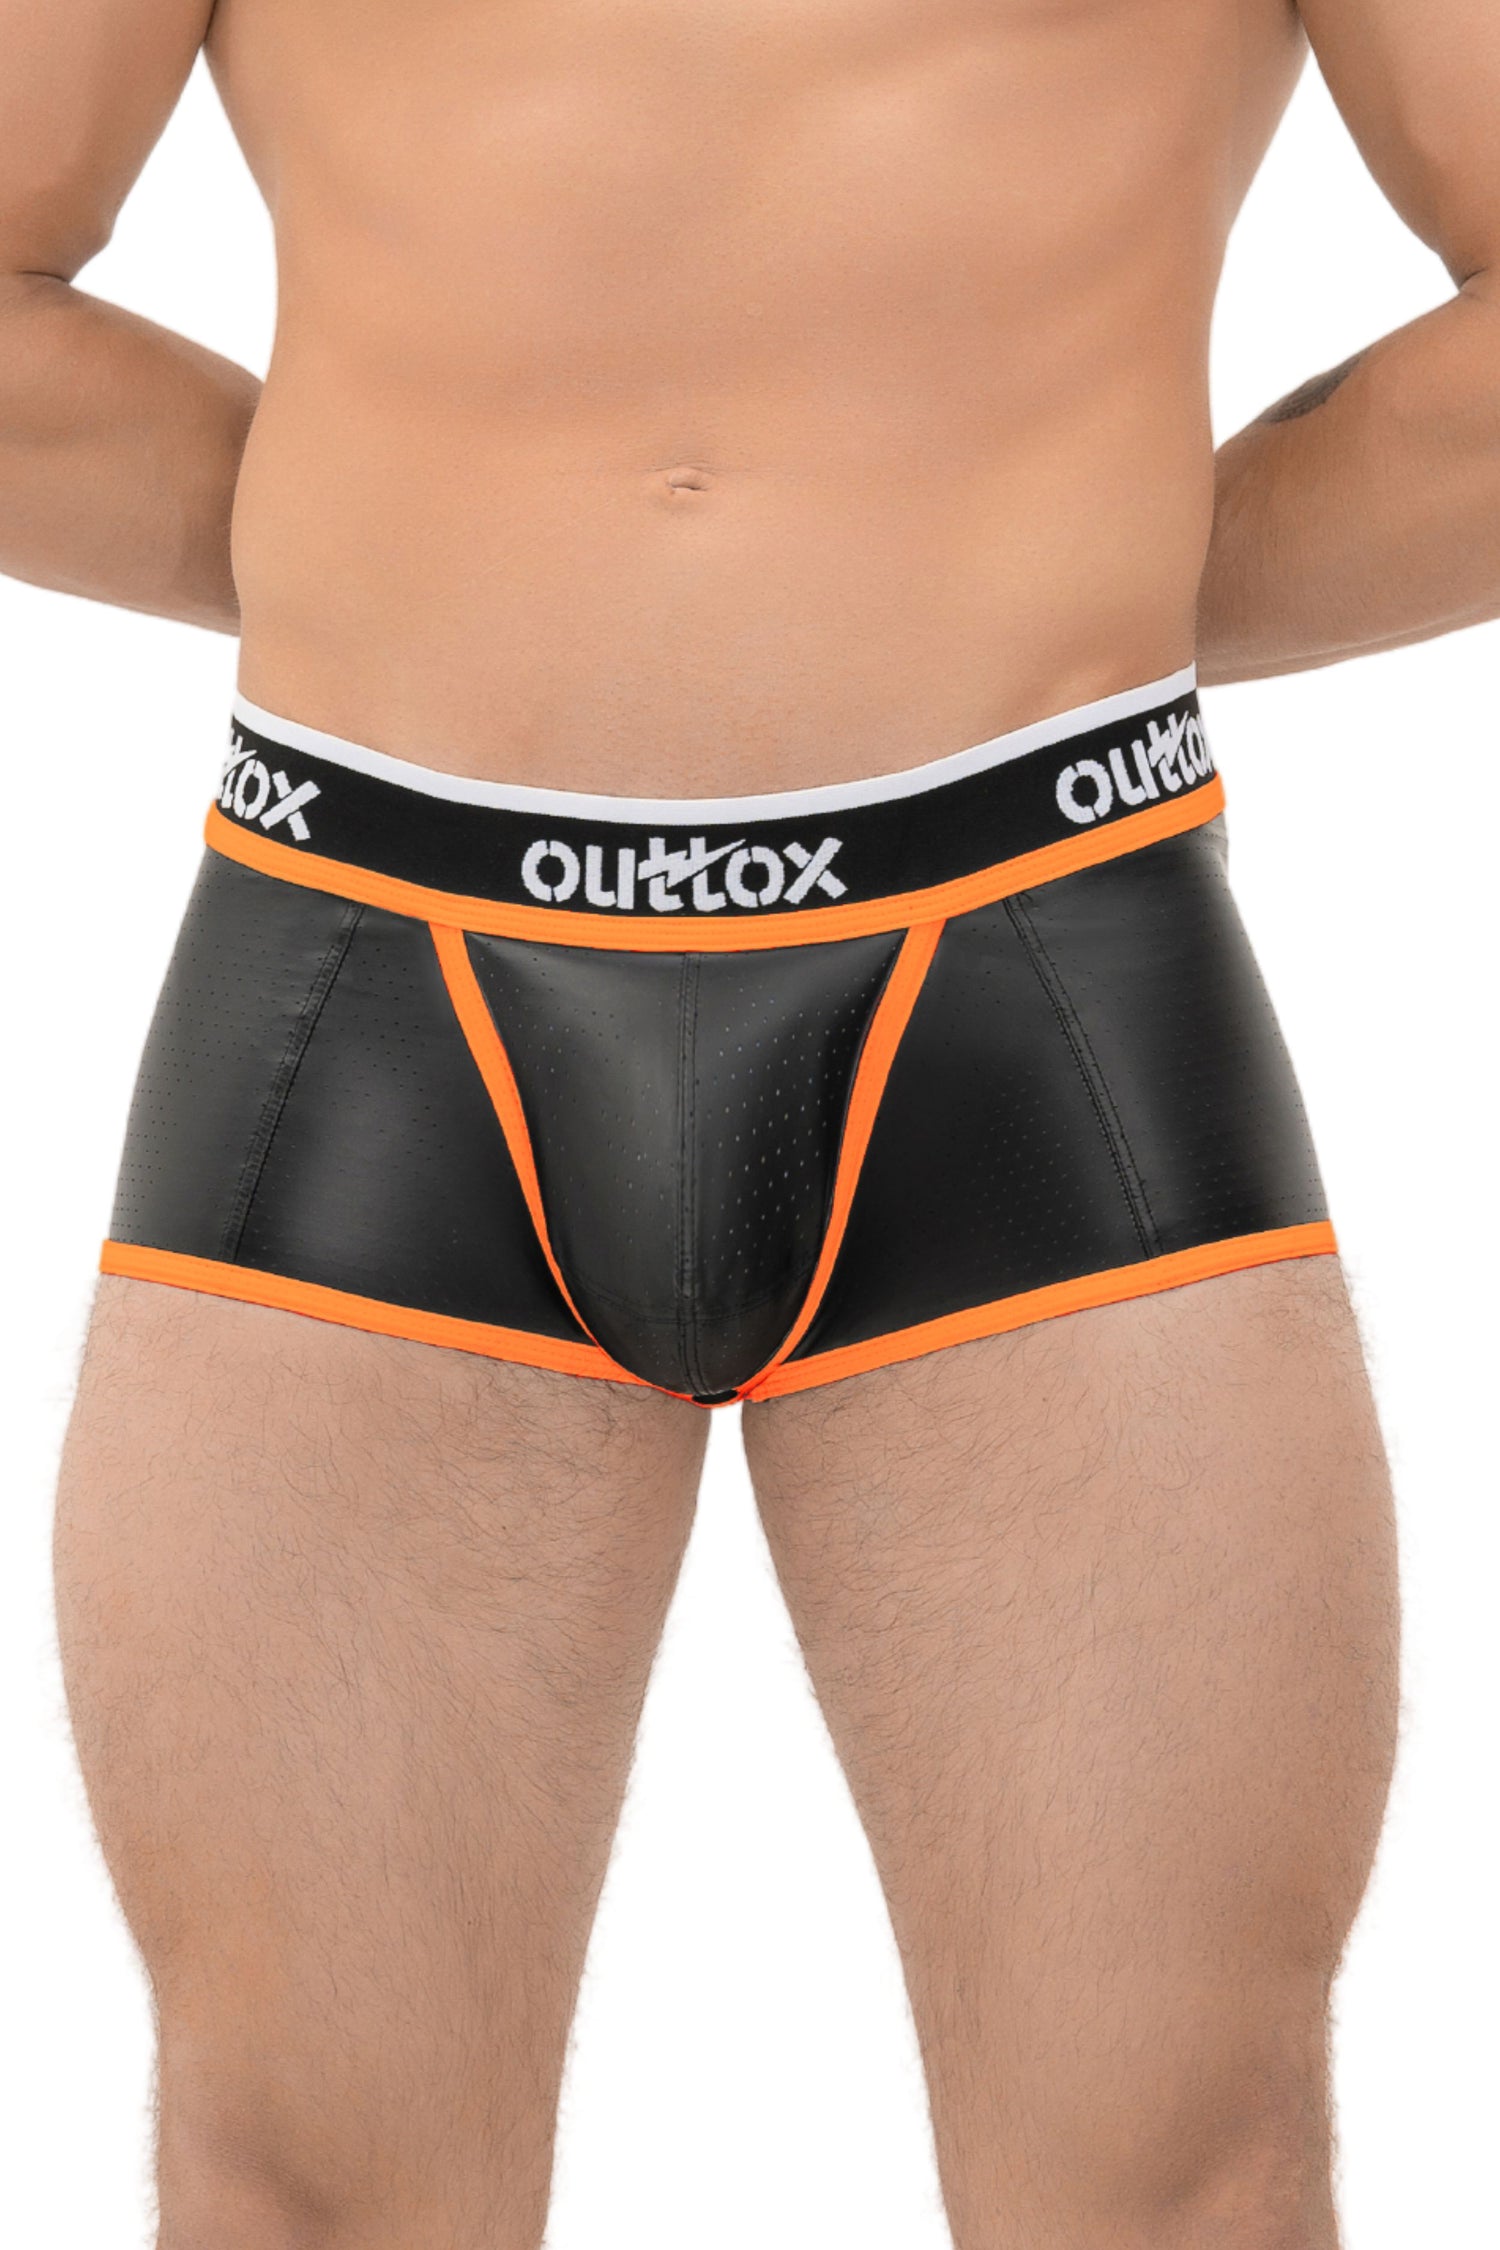 Outtox. Pantalones cortos con parte trasera abierta y bragueta a presión. Negro+Naranja